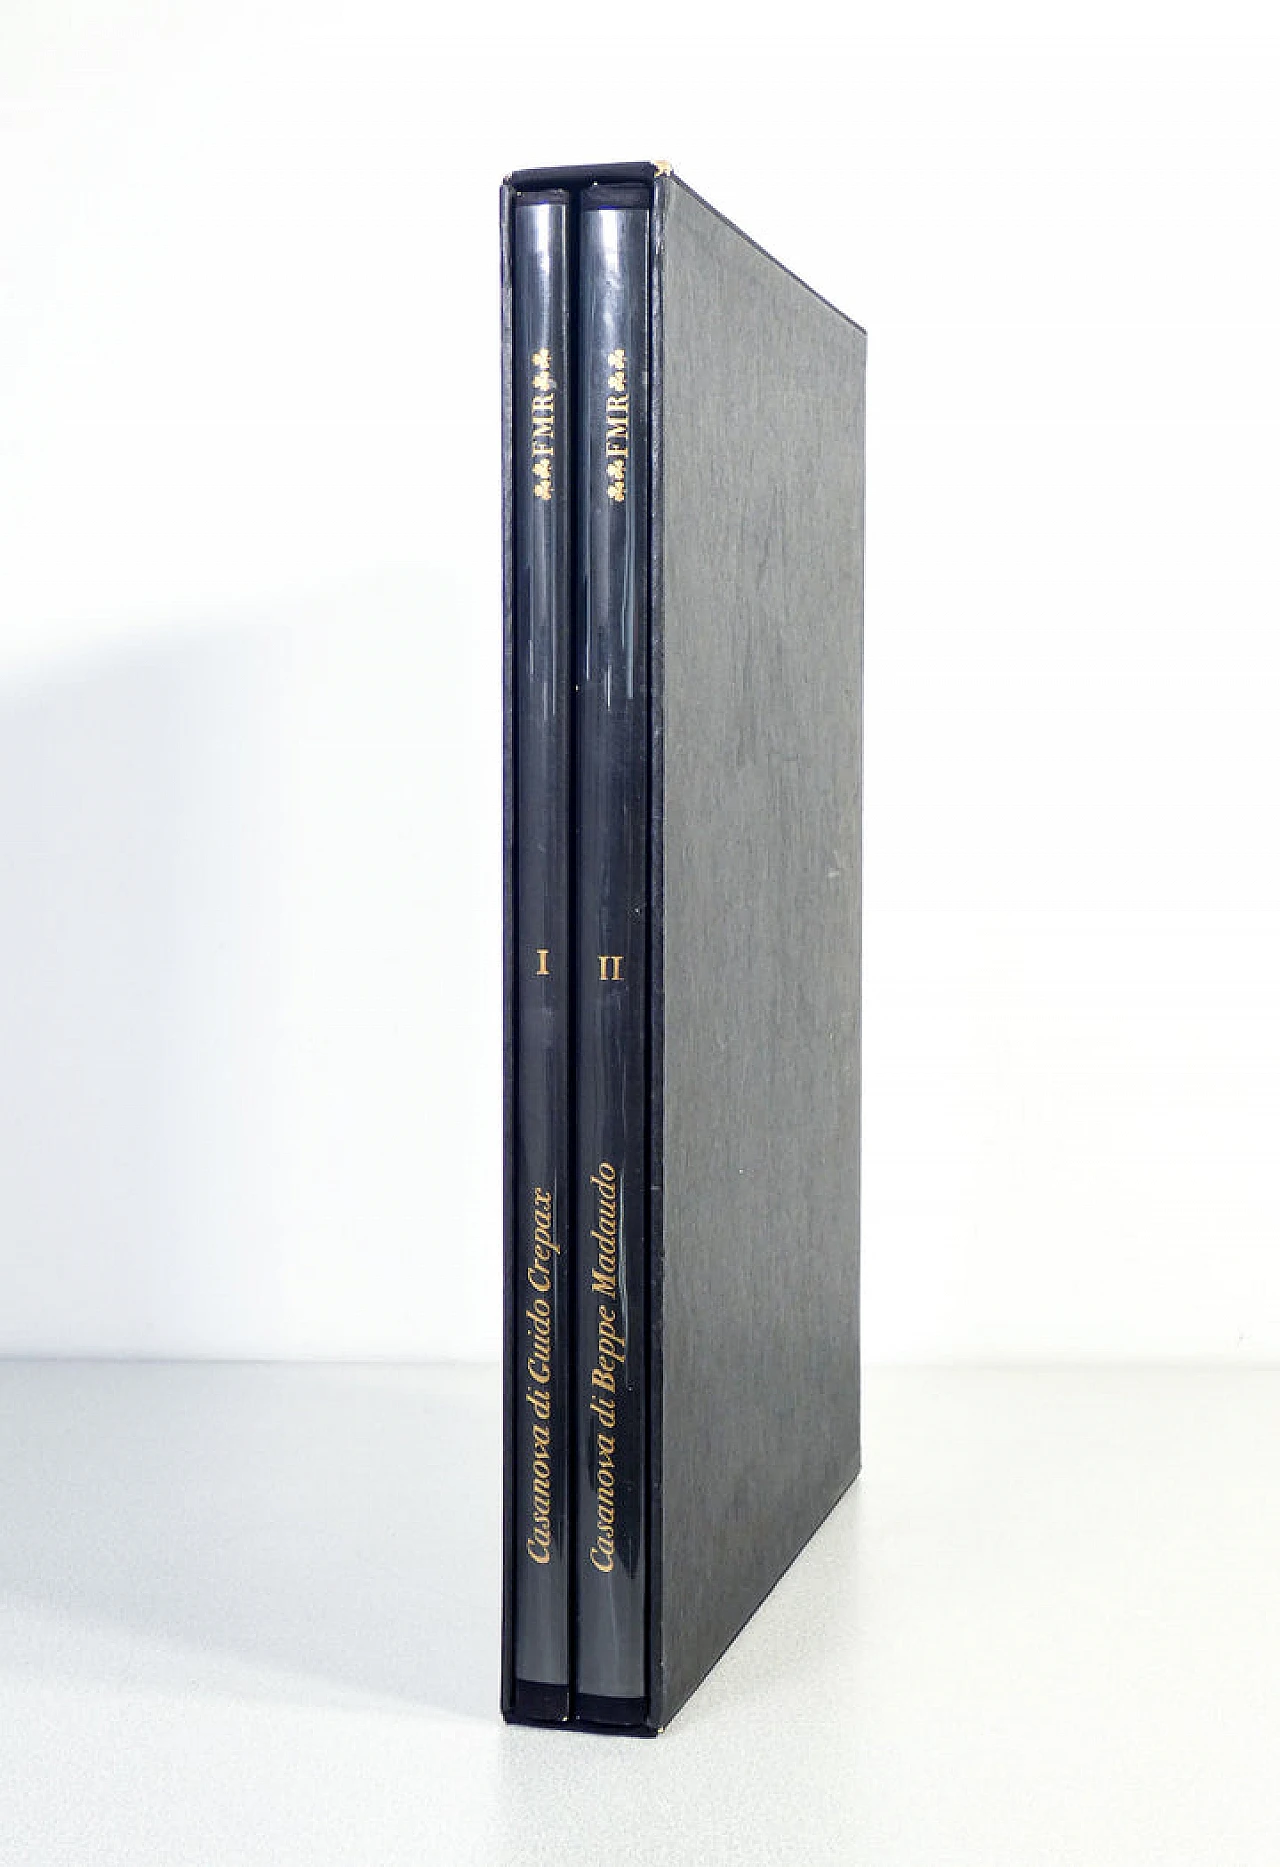 Crepax and Madaudo, Casanova, pair of volumes, FMR Editore, 1977 1